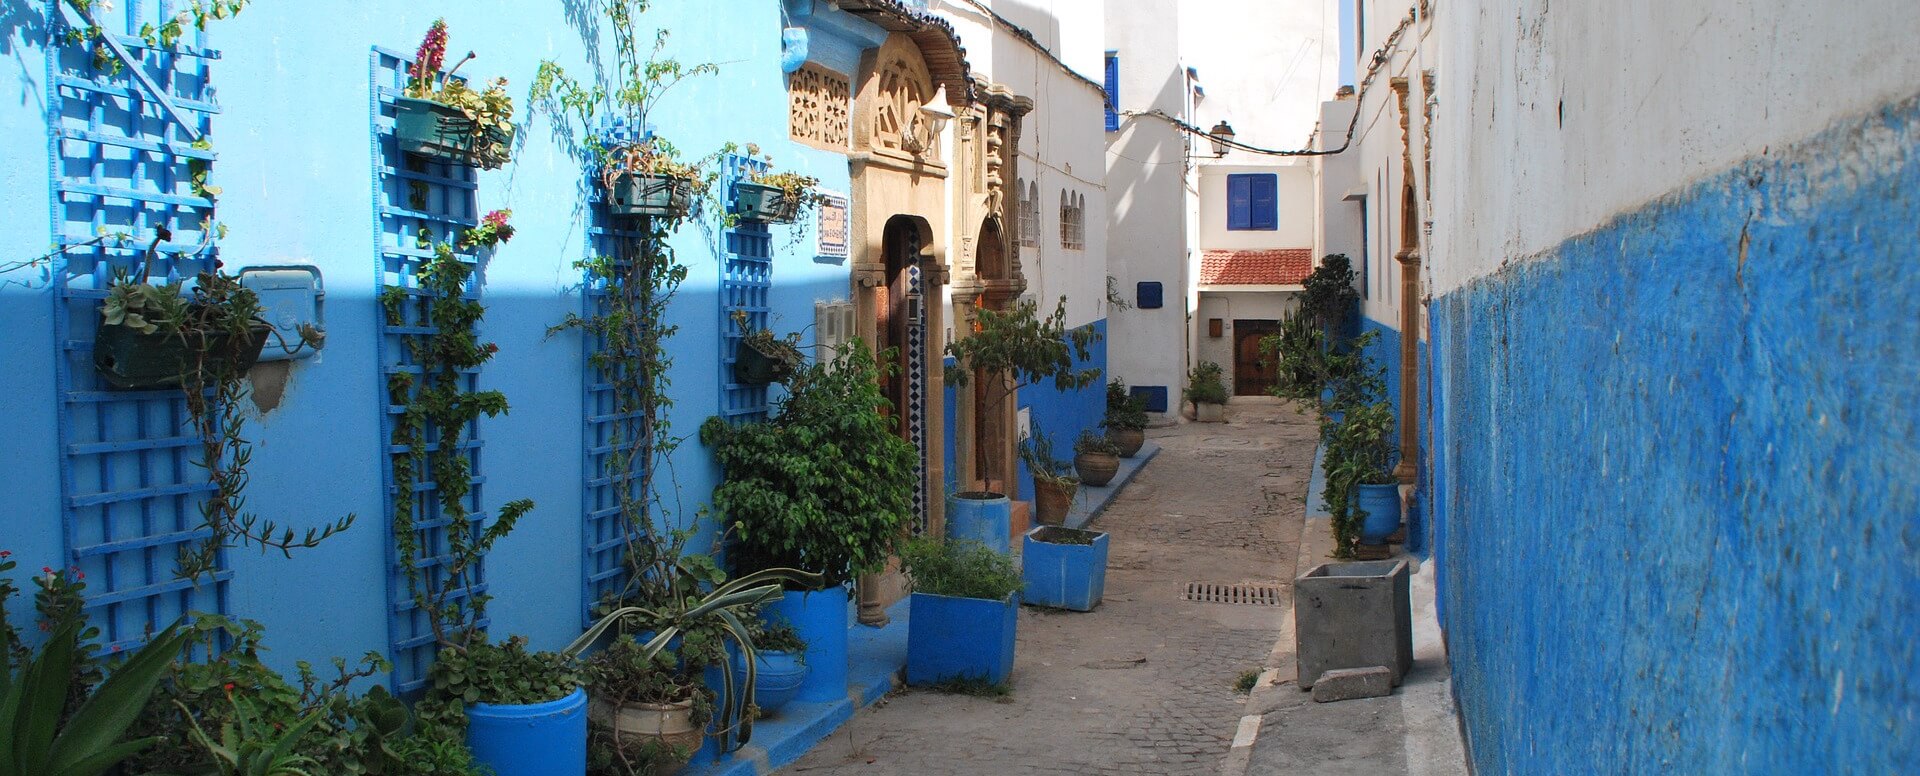 4. The city of Rabat - Morocco